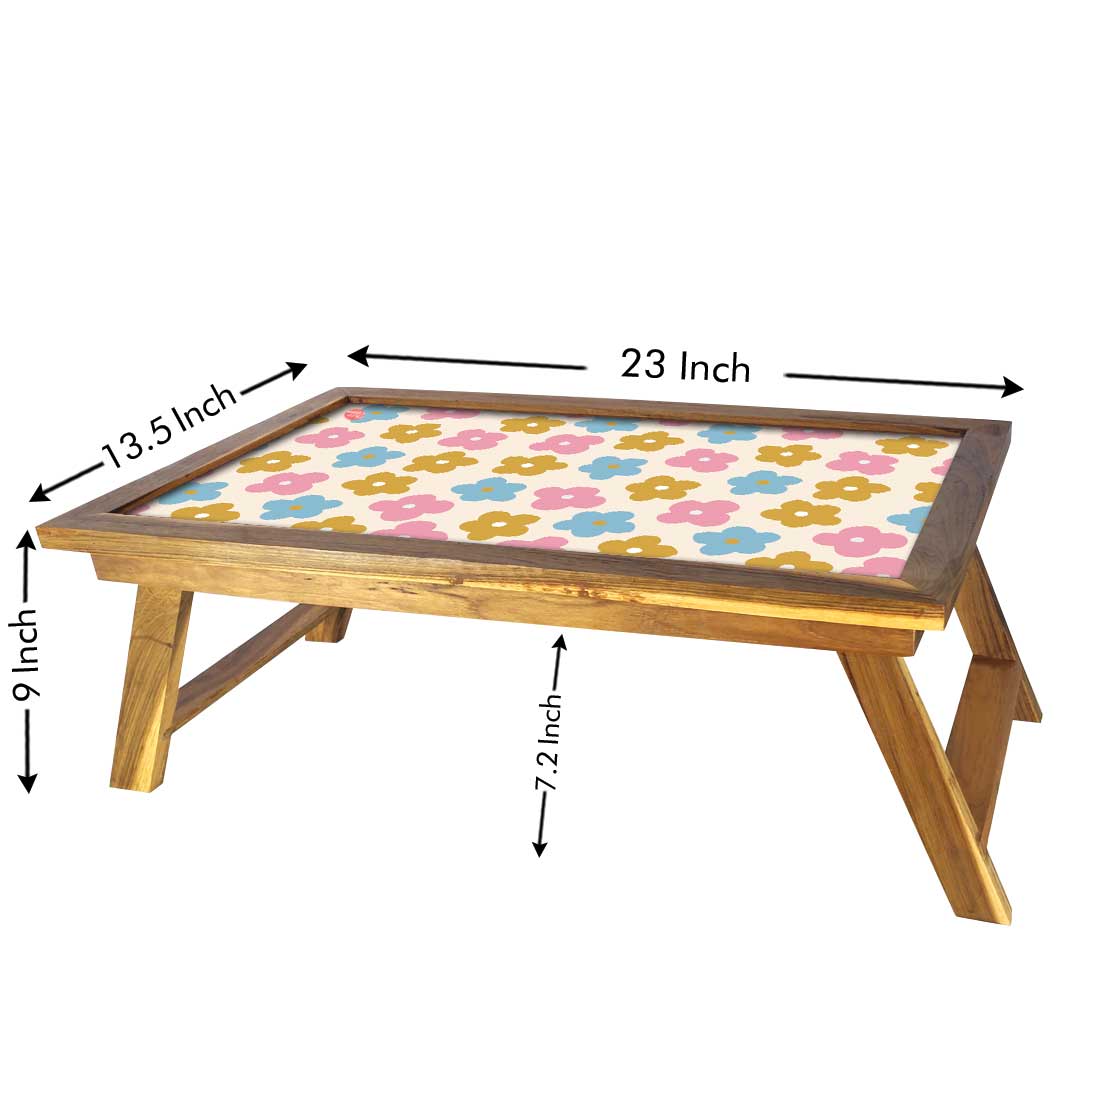 Nutcase Folding Laptop Table For Home Bed Lapdesk Breakfast Table Foldable Teak Wooden Study Desk - Pastels Spring Flowers Nutcase